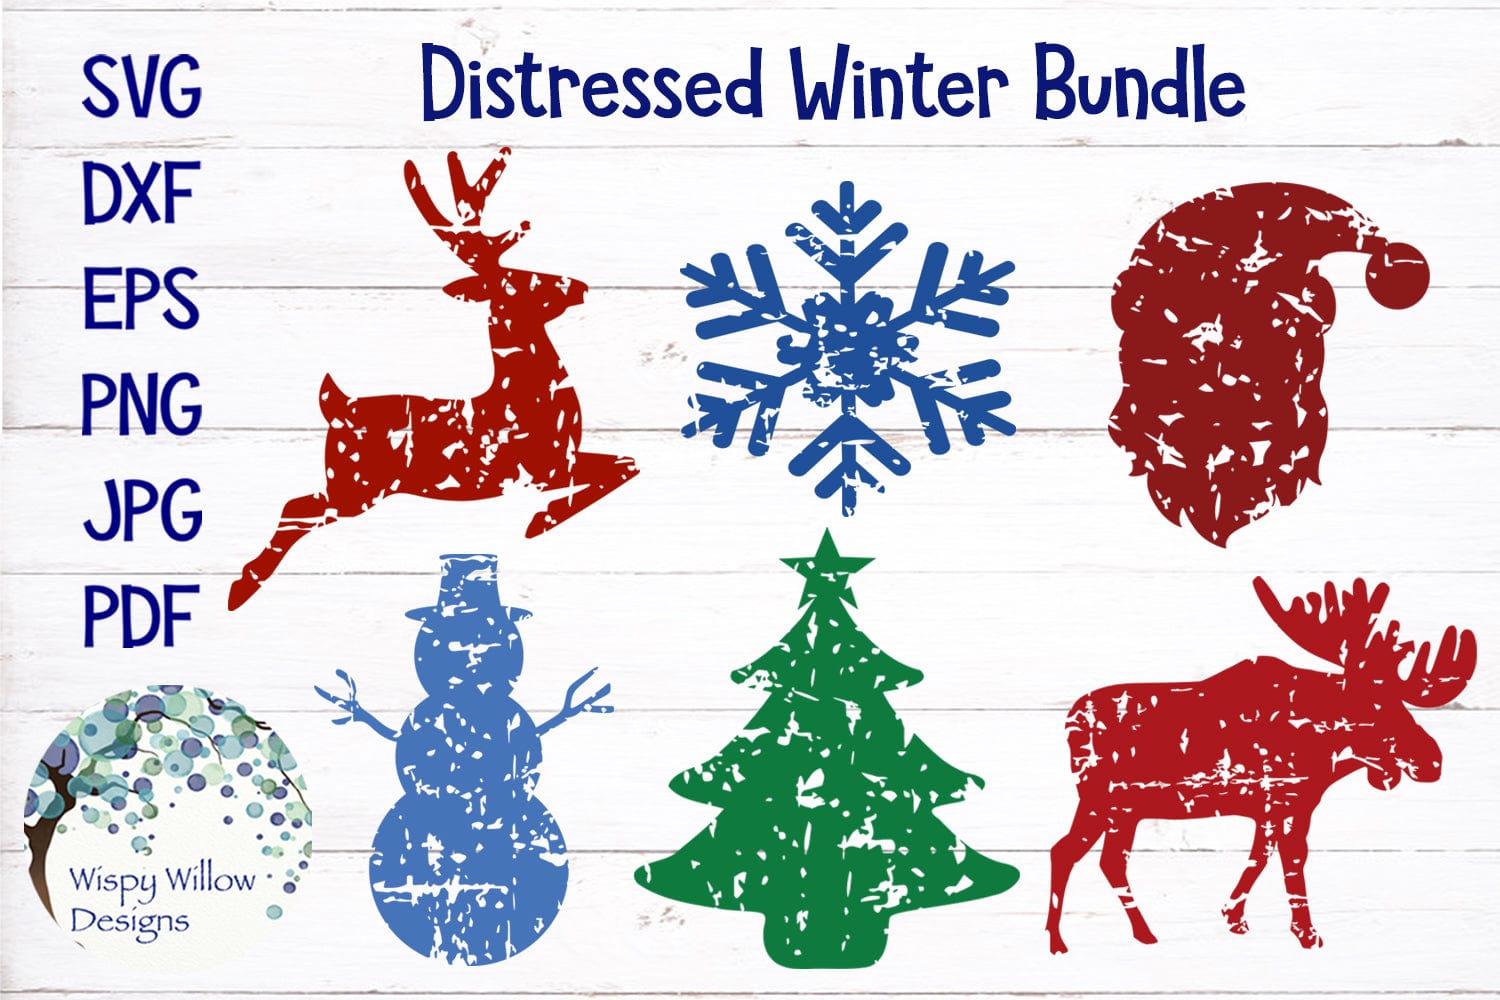 Winter Distressed Bundle SVG Wispy Willow Designs Company